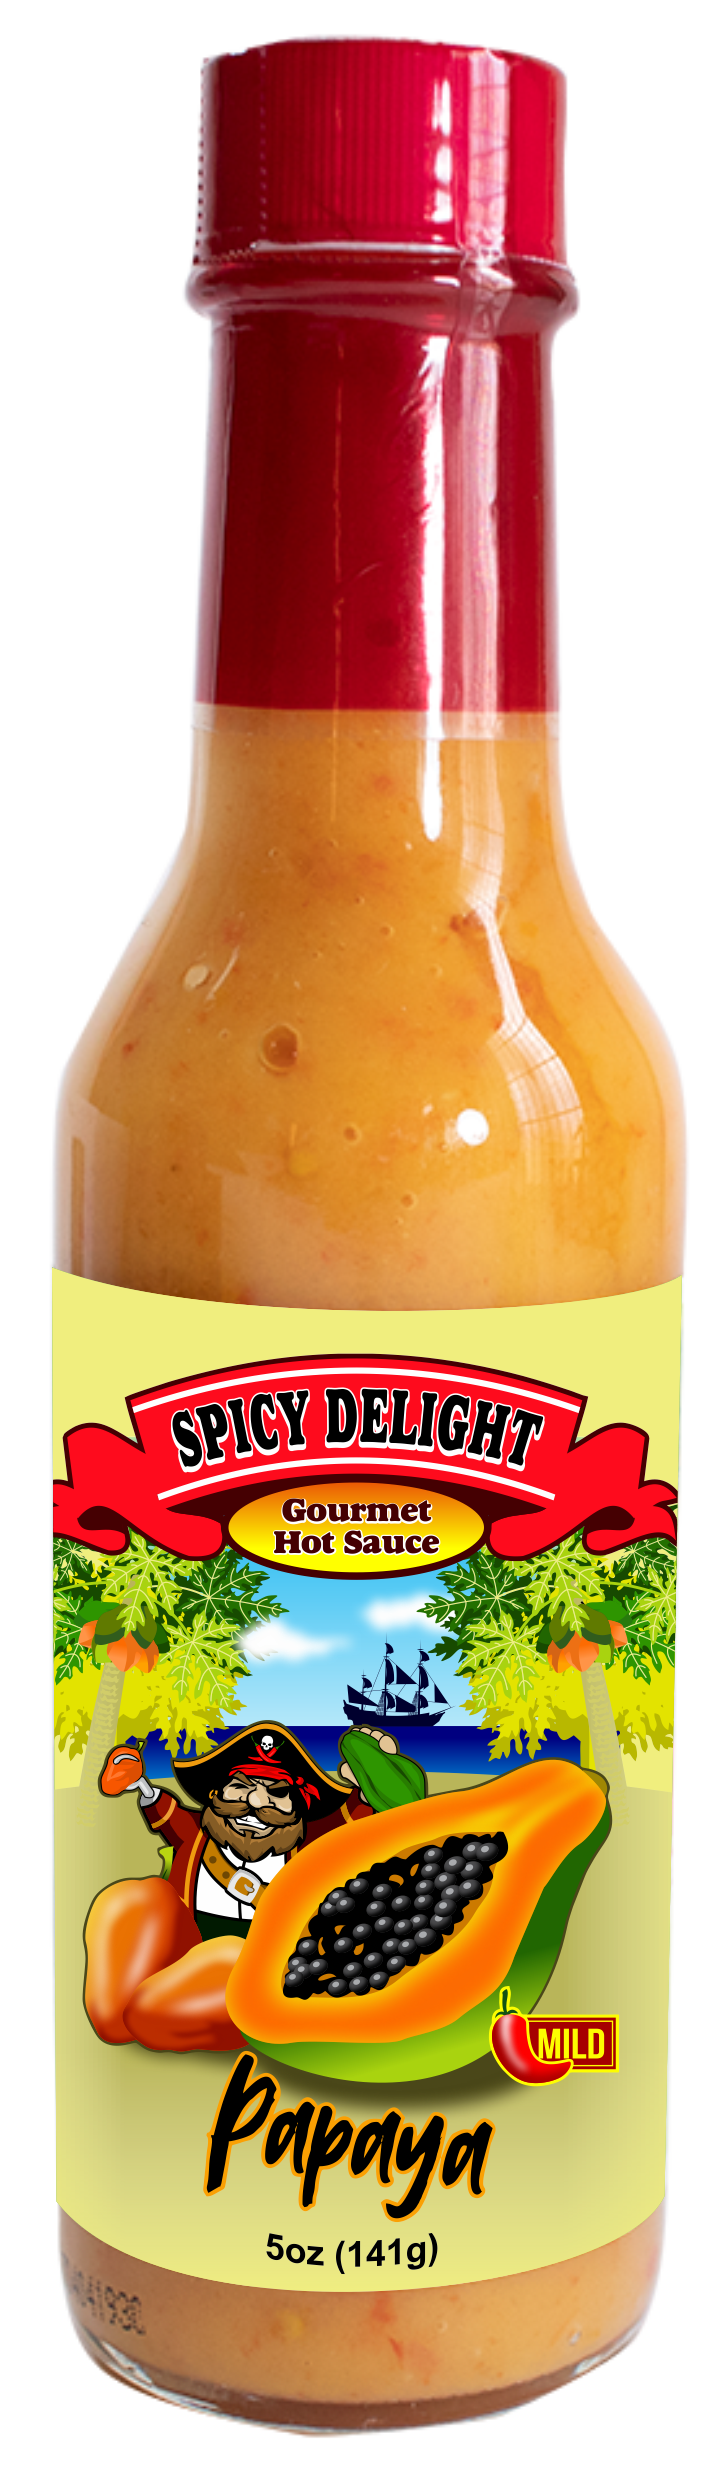 Spicy Delight Hot Sauce